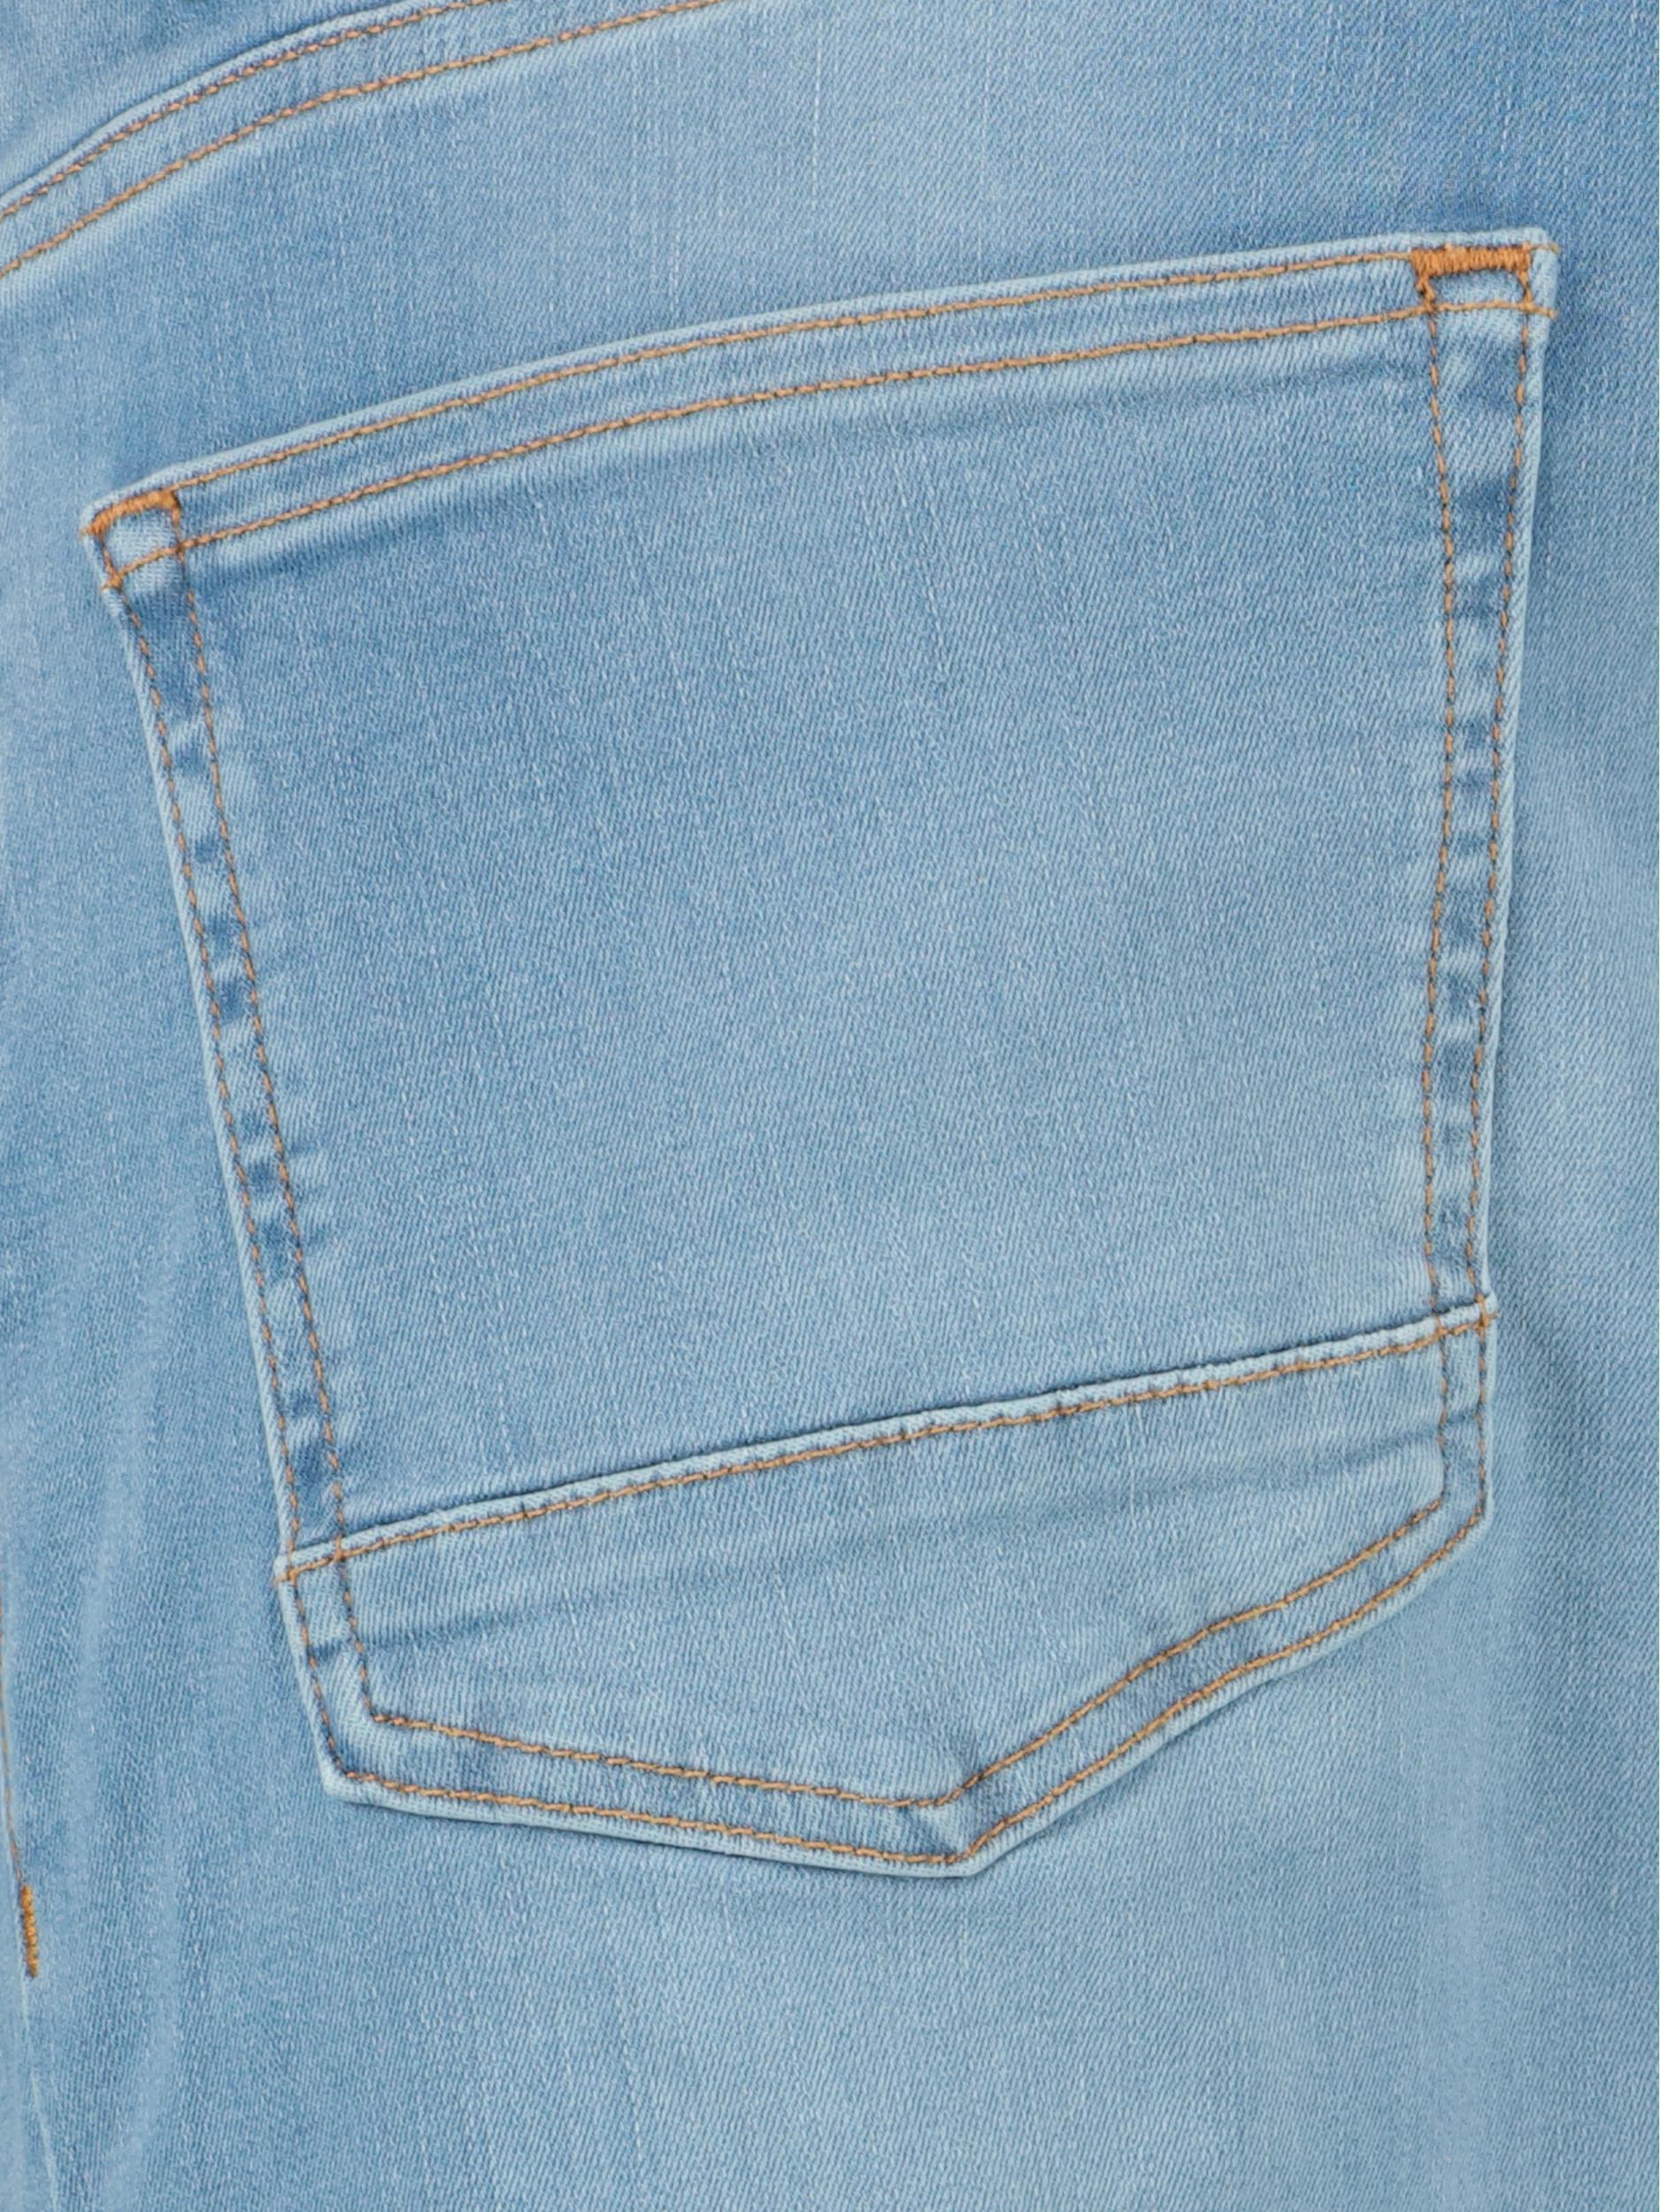 BOSS Orange 5-Pocket Jeans Blauw Delaware BC-L-P 10241147 03 50488327/432